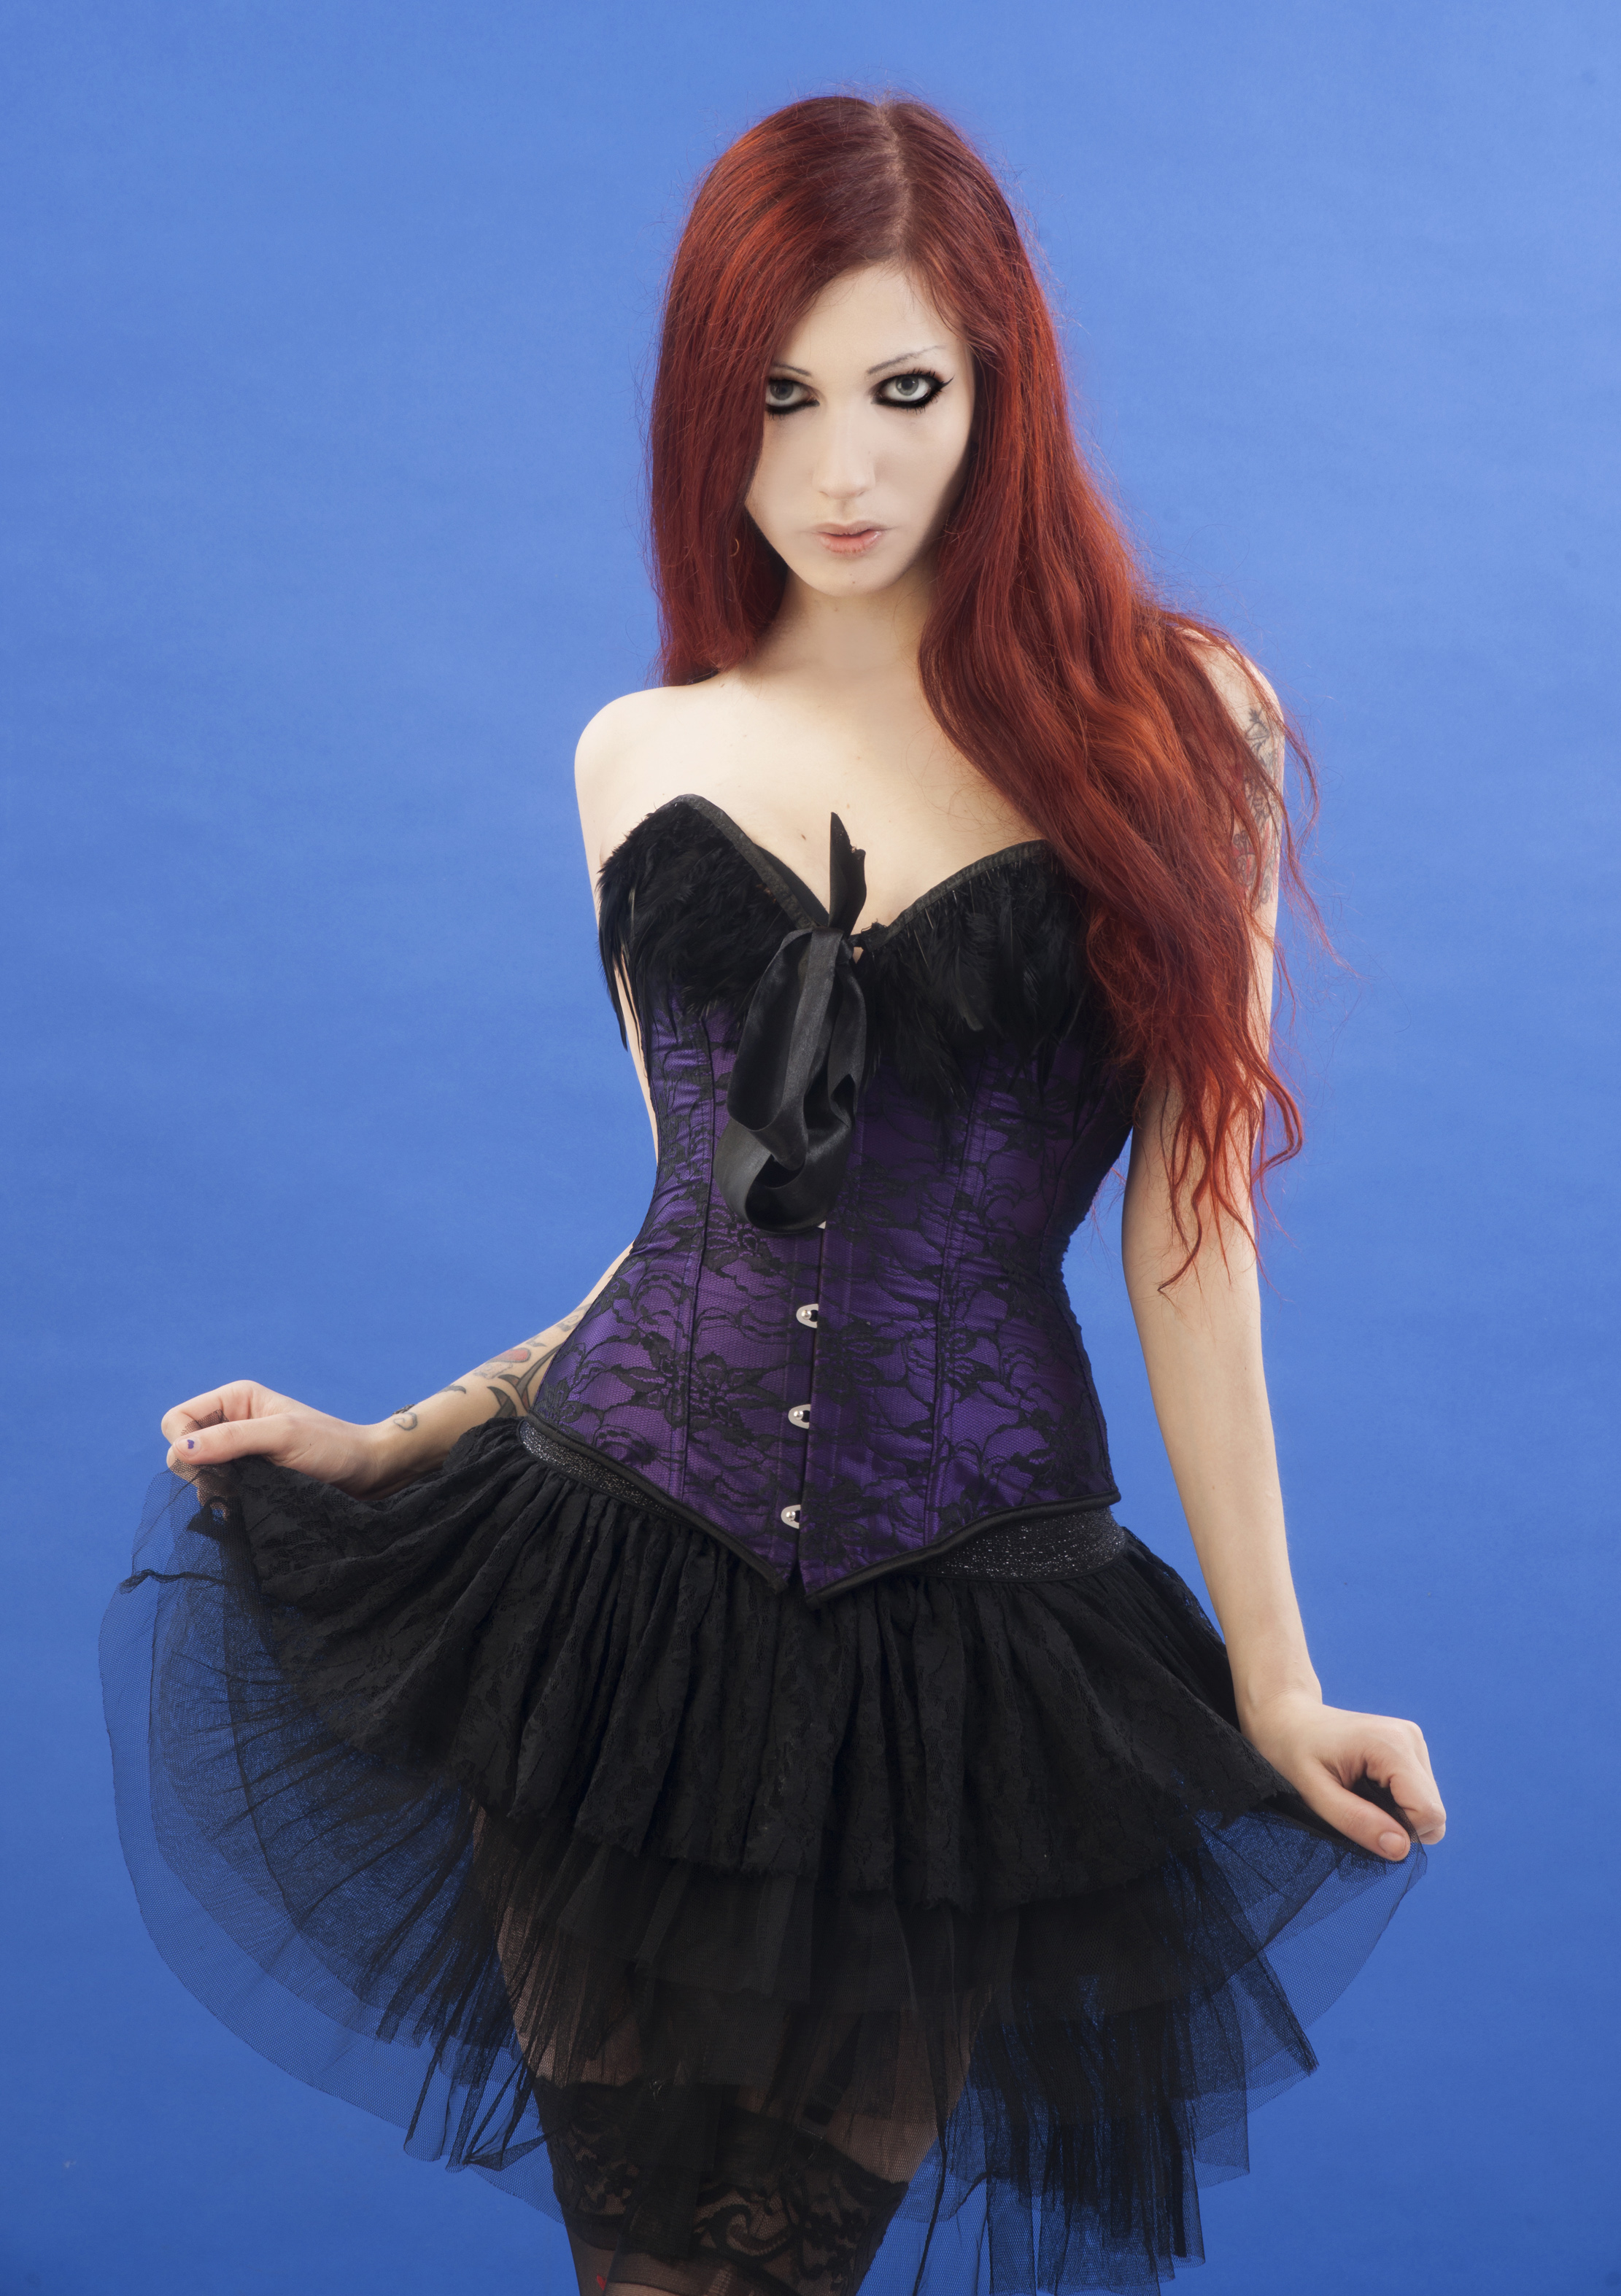 Cradleofdoll Women Goths Alternative Subculture Gothic Corset Skirt Frontal View